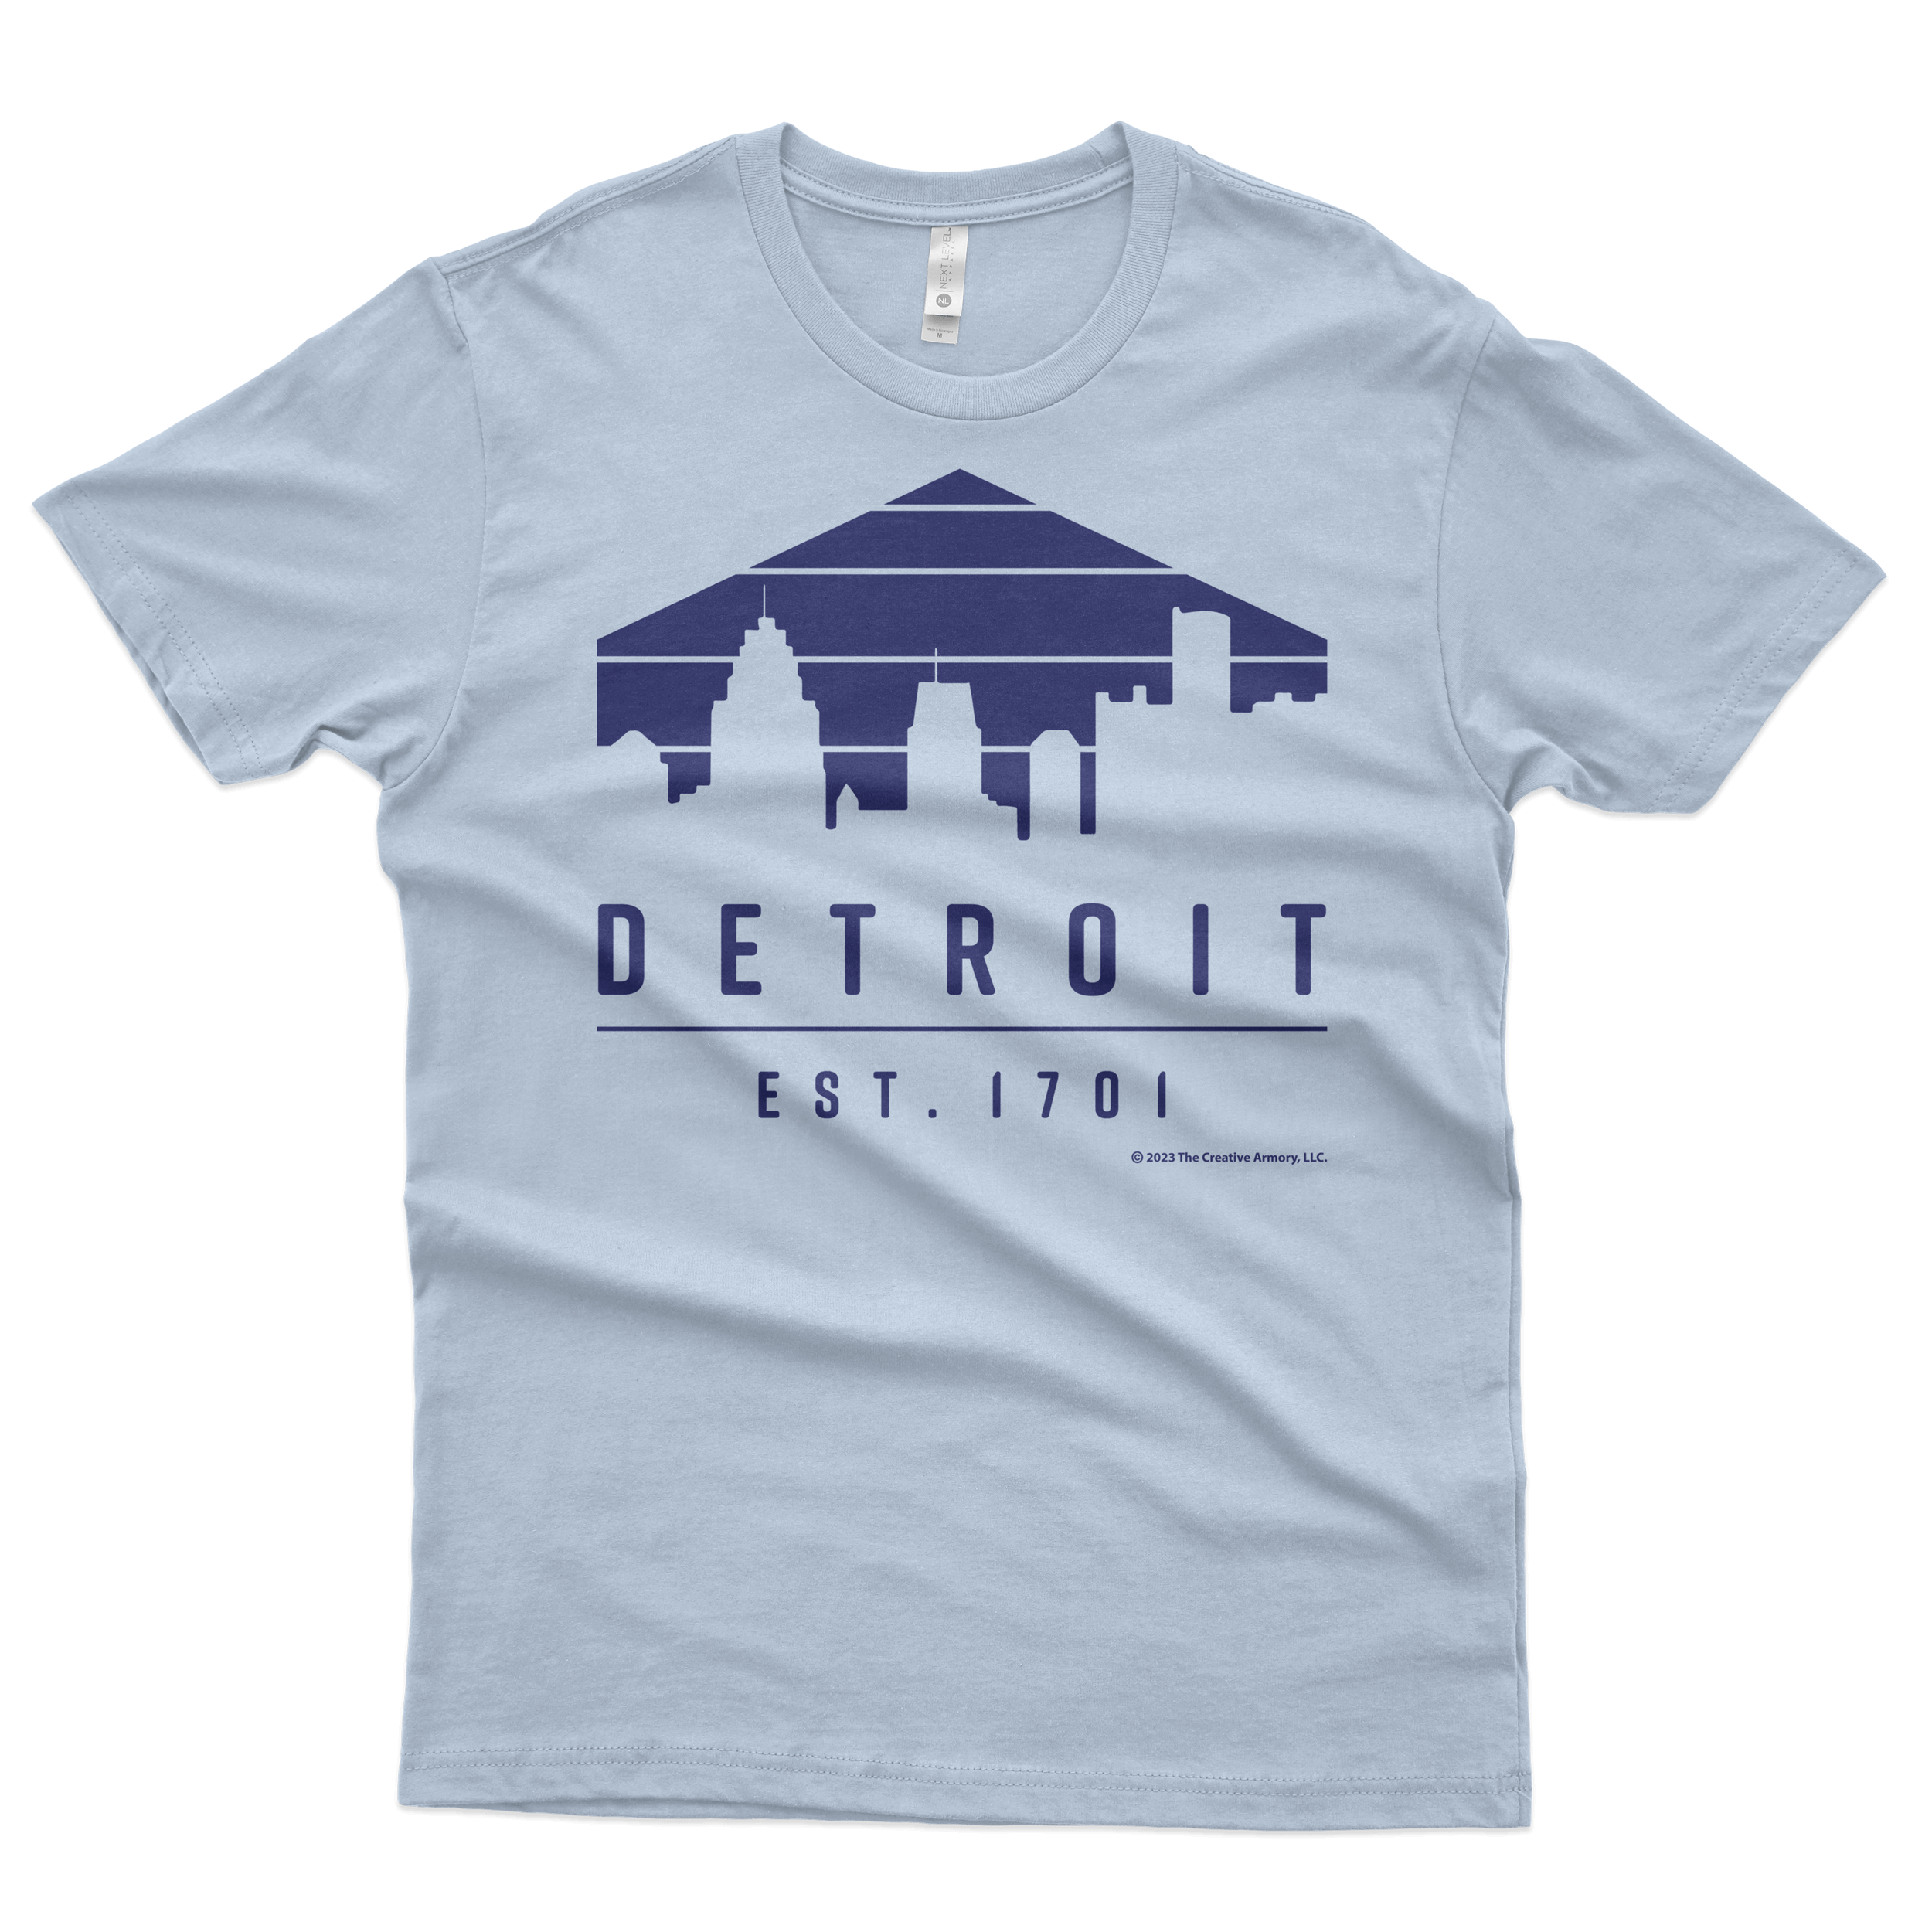 Detroit 1701 T-Shirt - Stonewash Denim/Navy (Limited Edition)